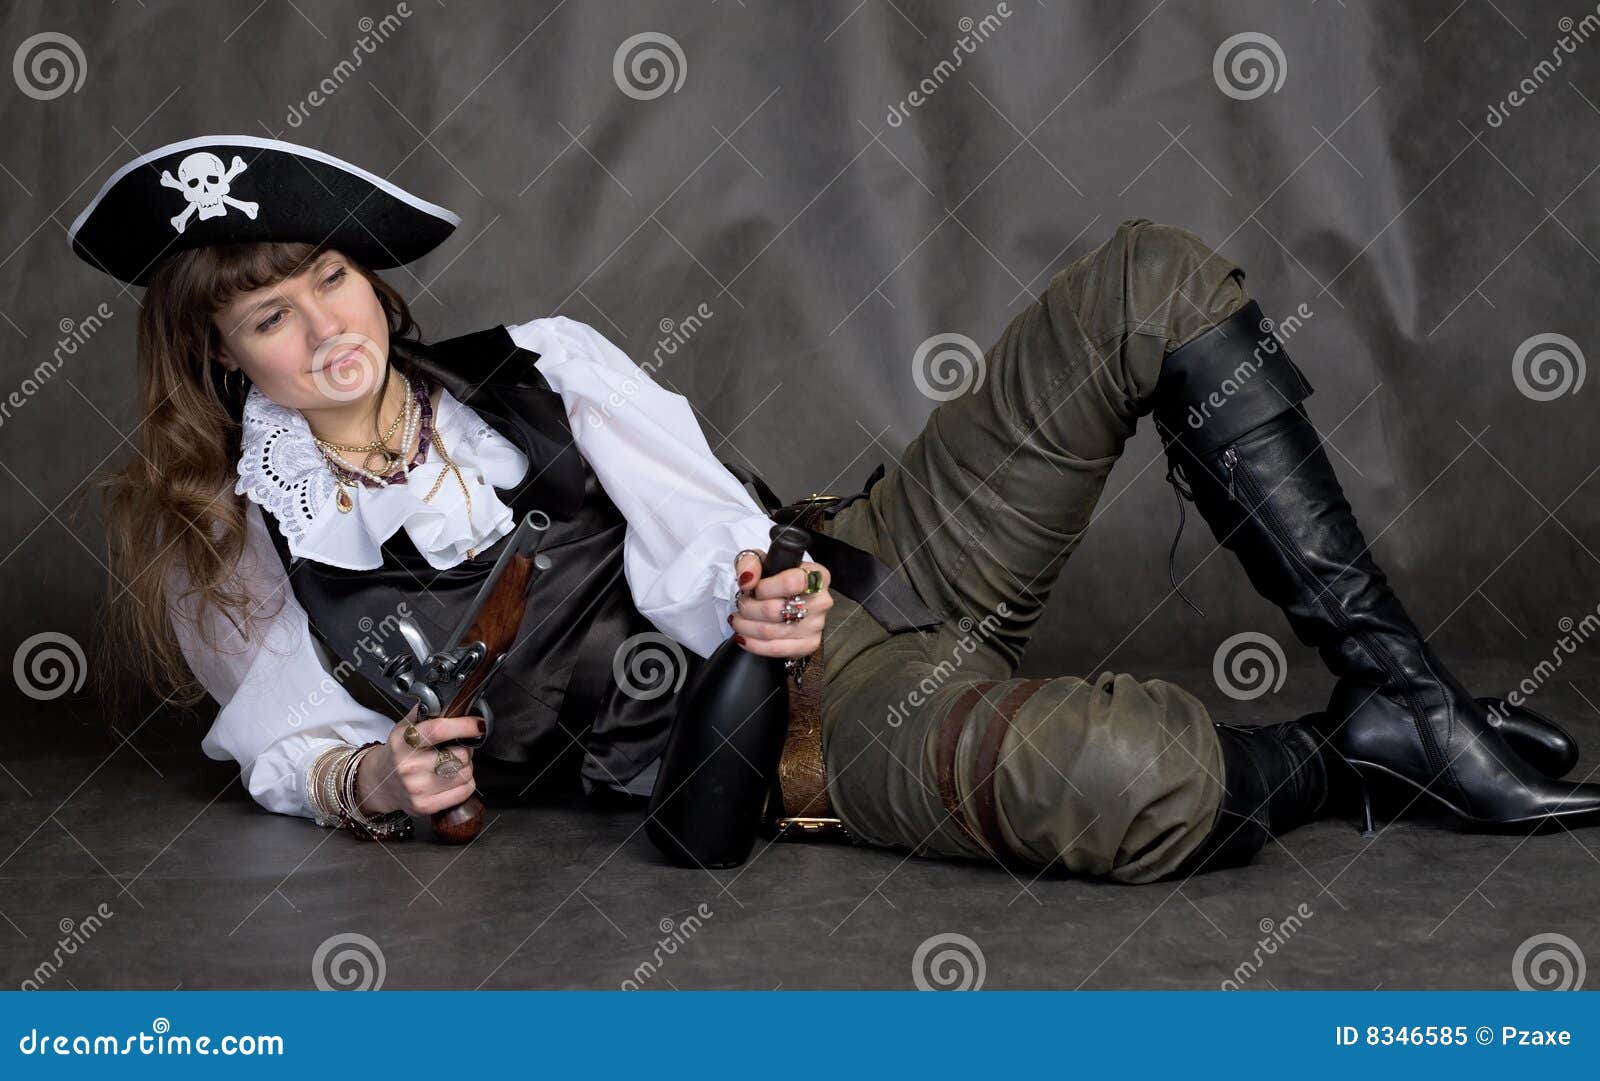 drunken girl - pirate with pistol and bottle